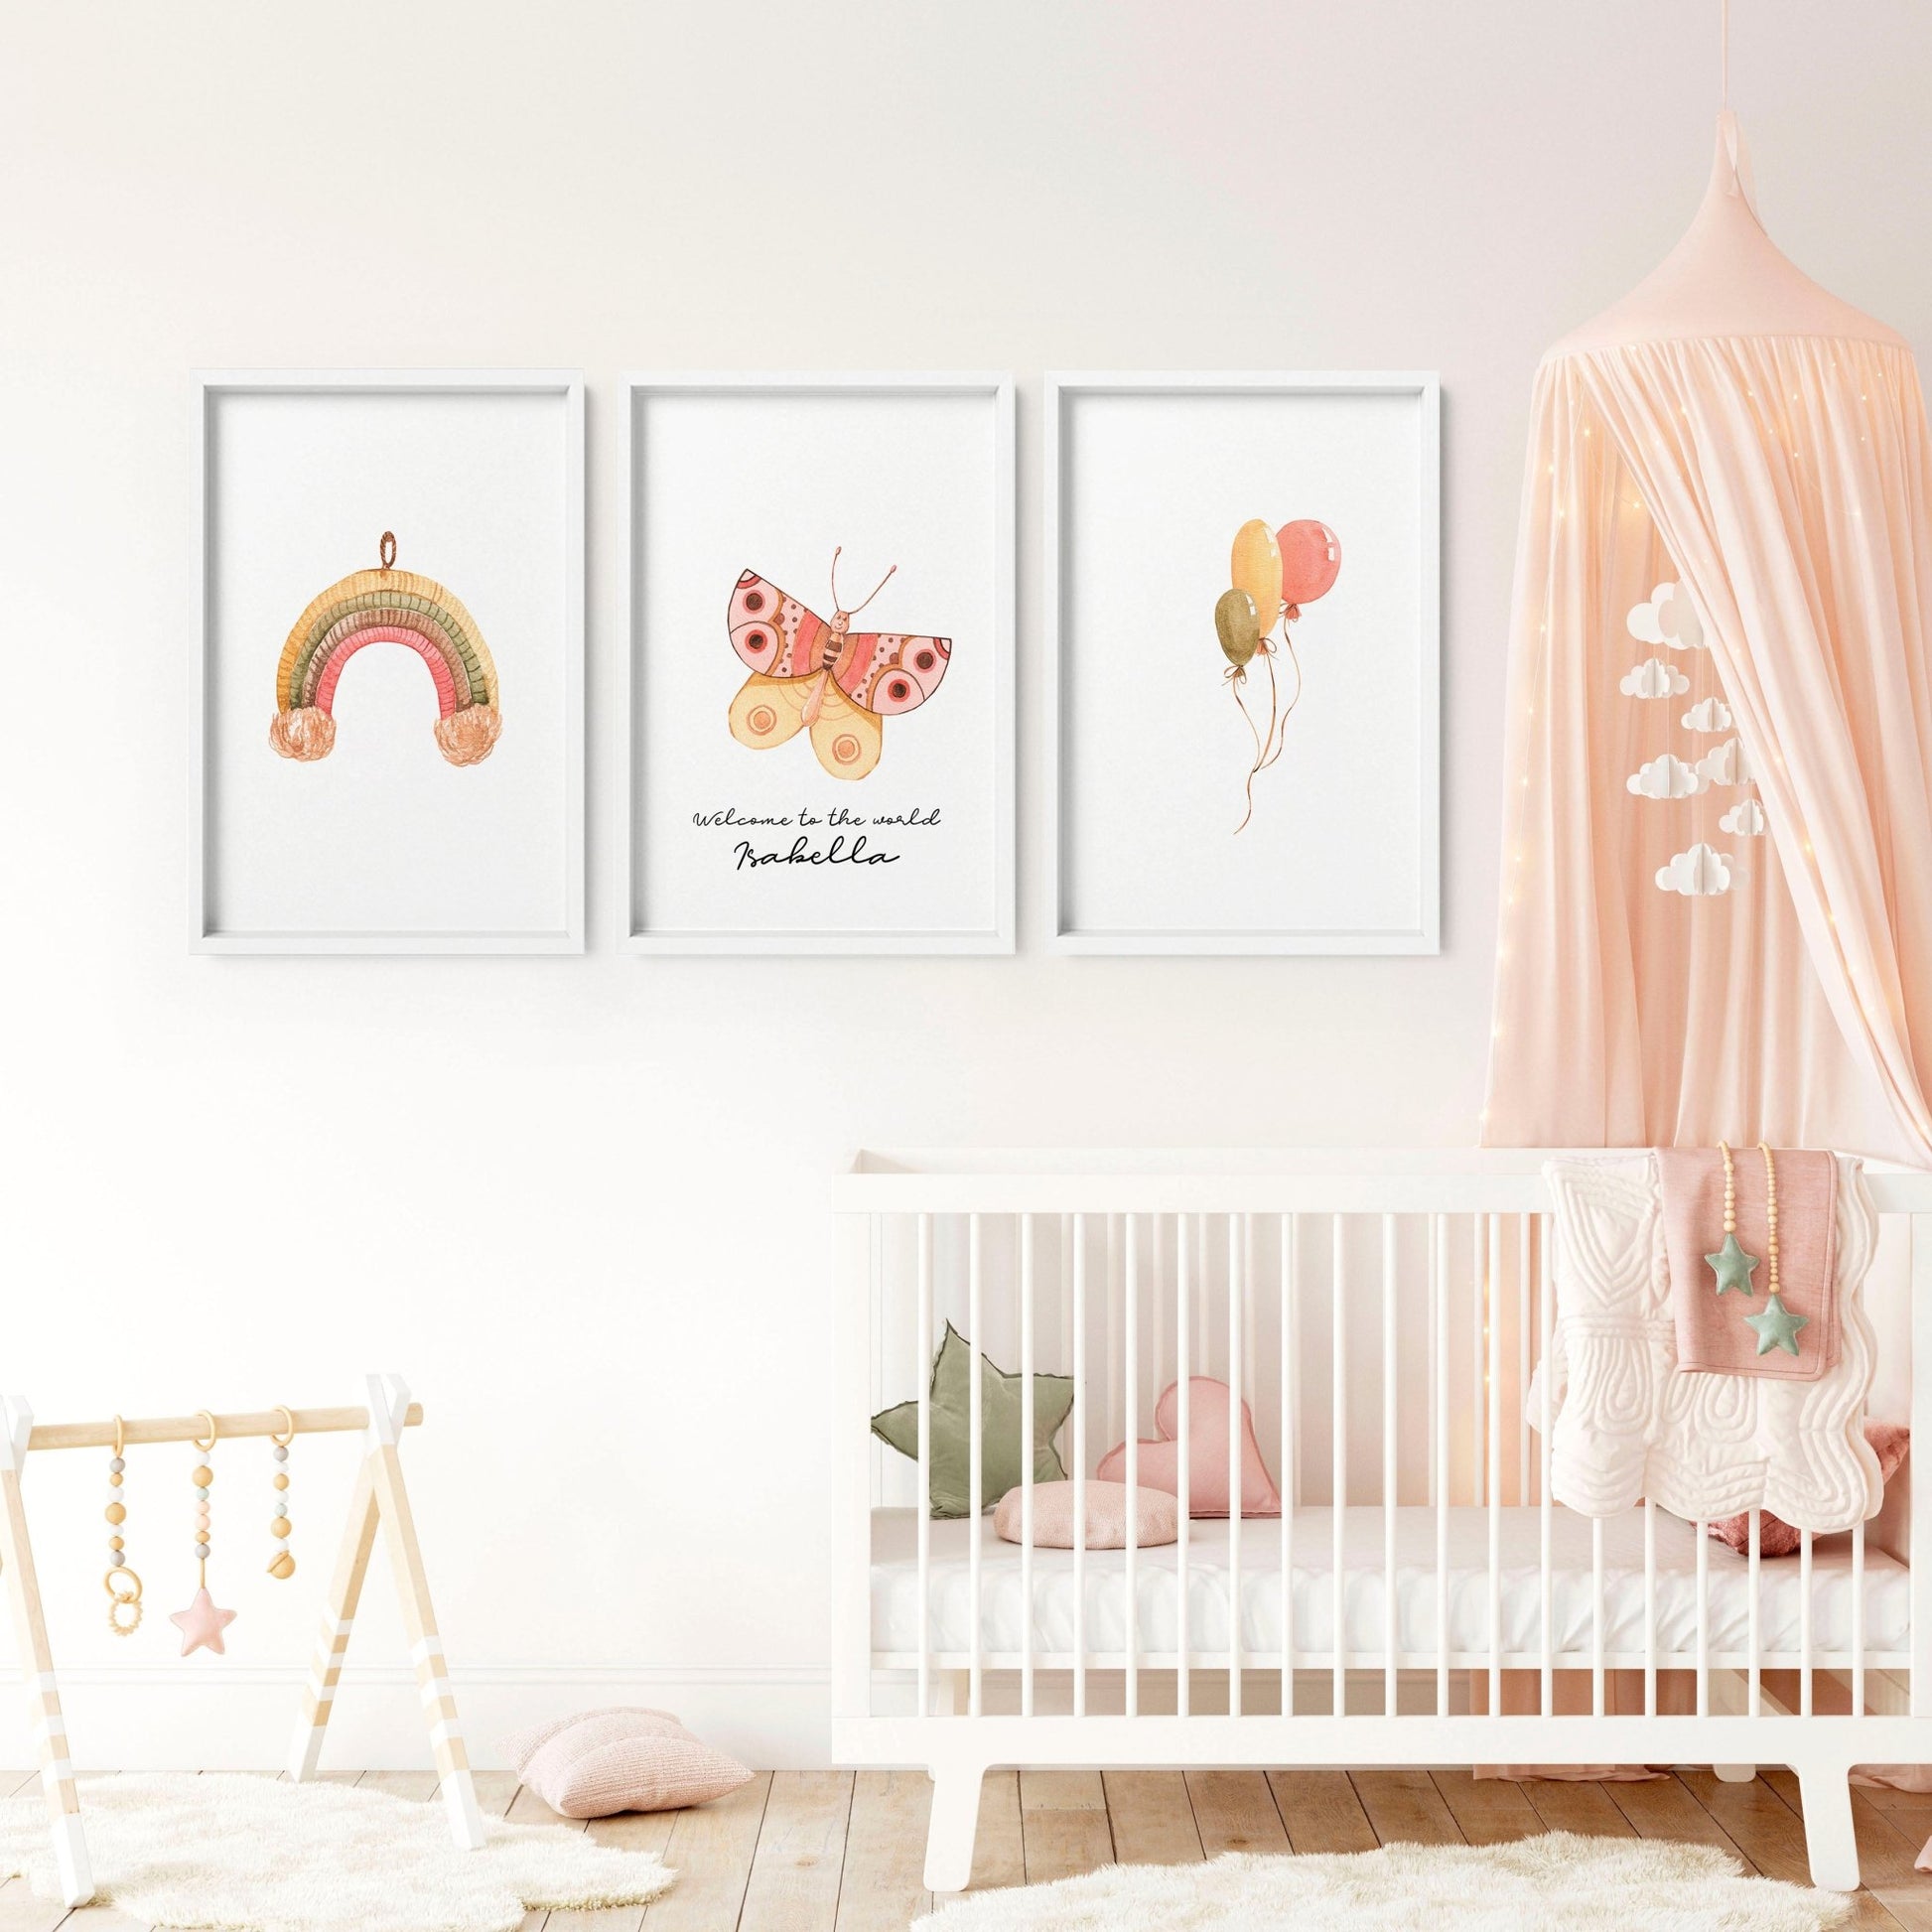 Boho nursery wall decor | set of 3 wall art prints - About Wall Art